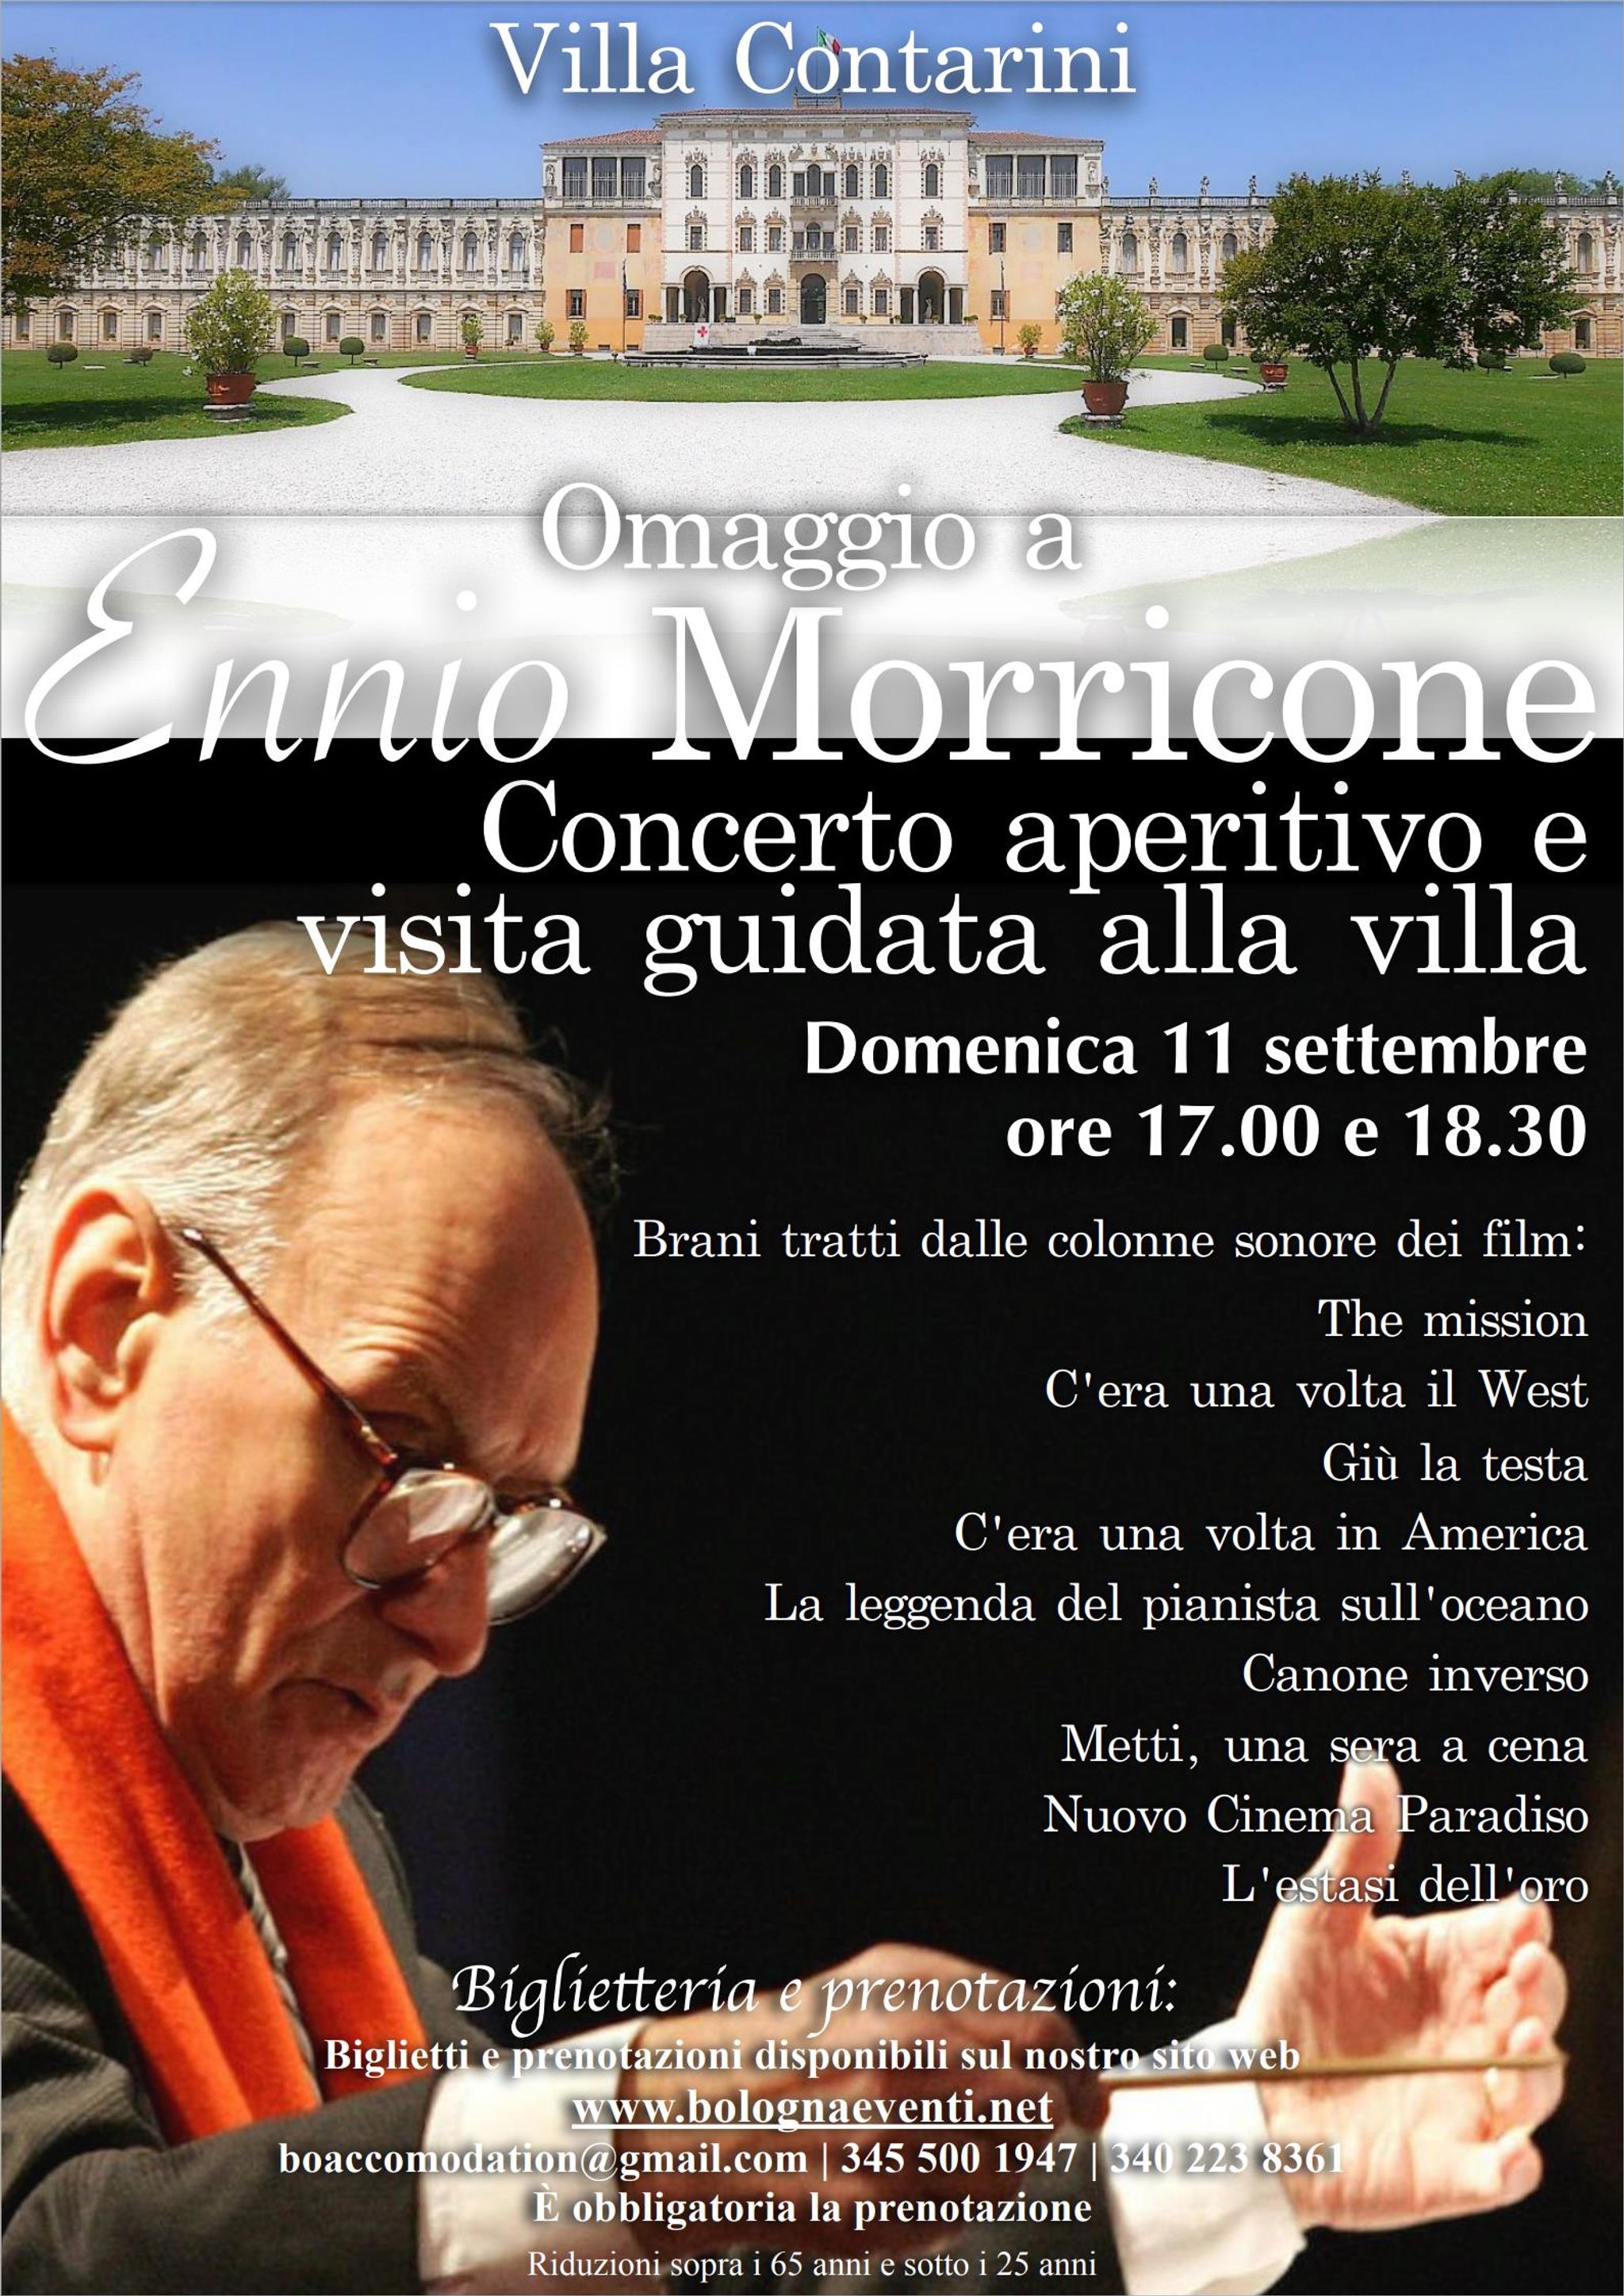 Aperitif concert - Homage to Ennio Morricone